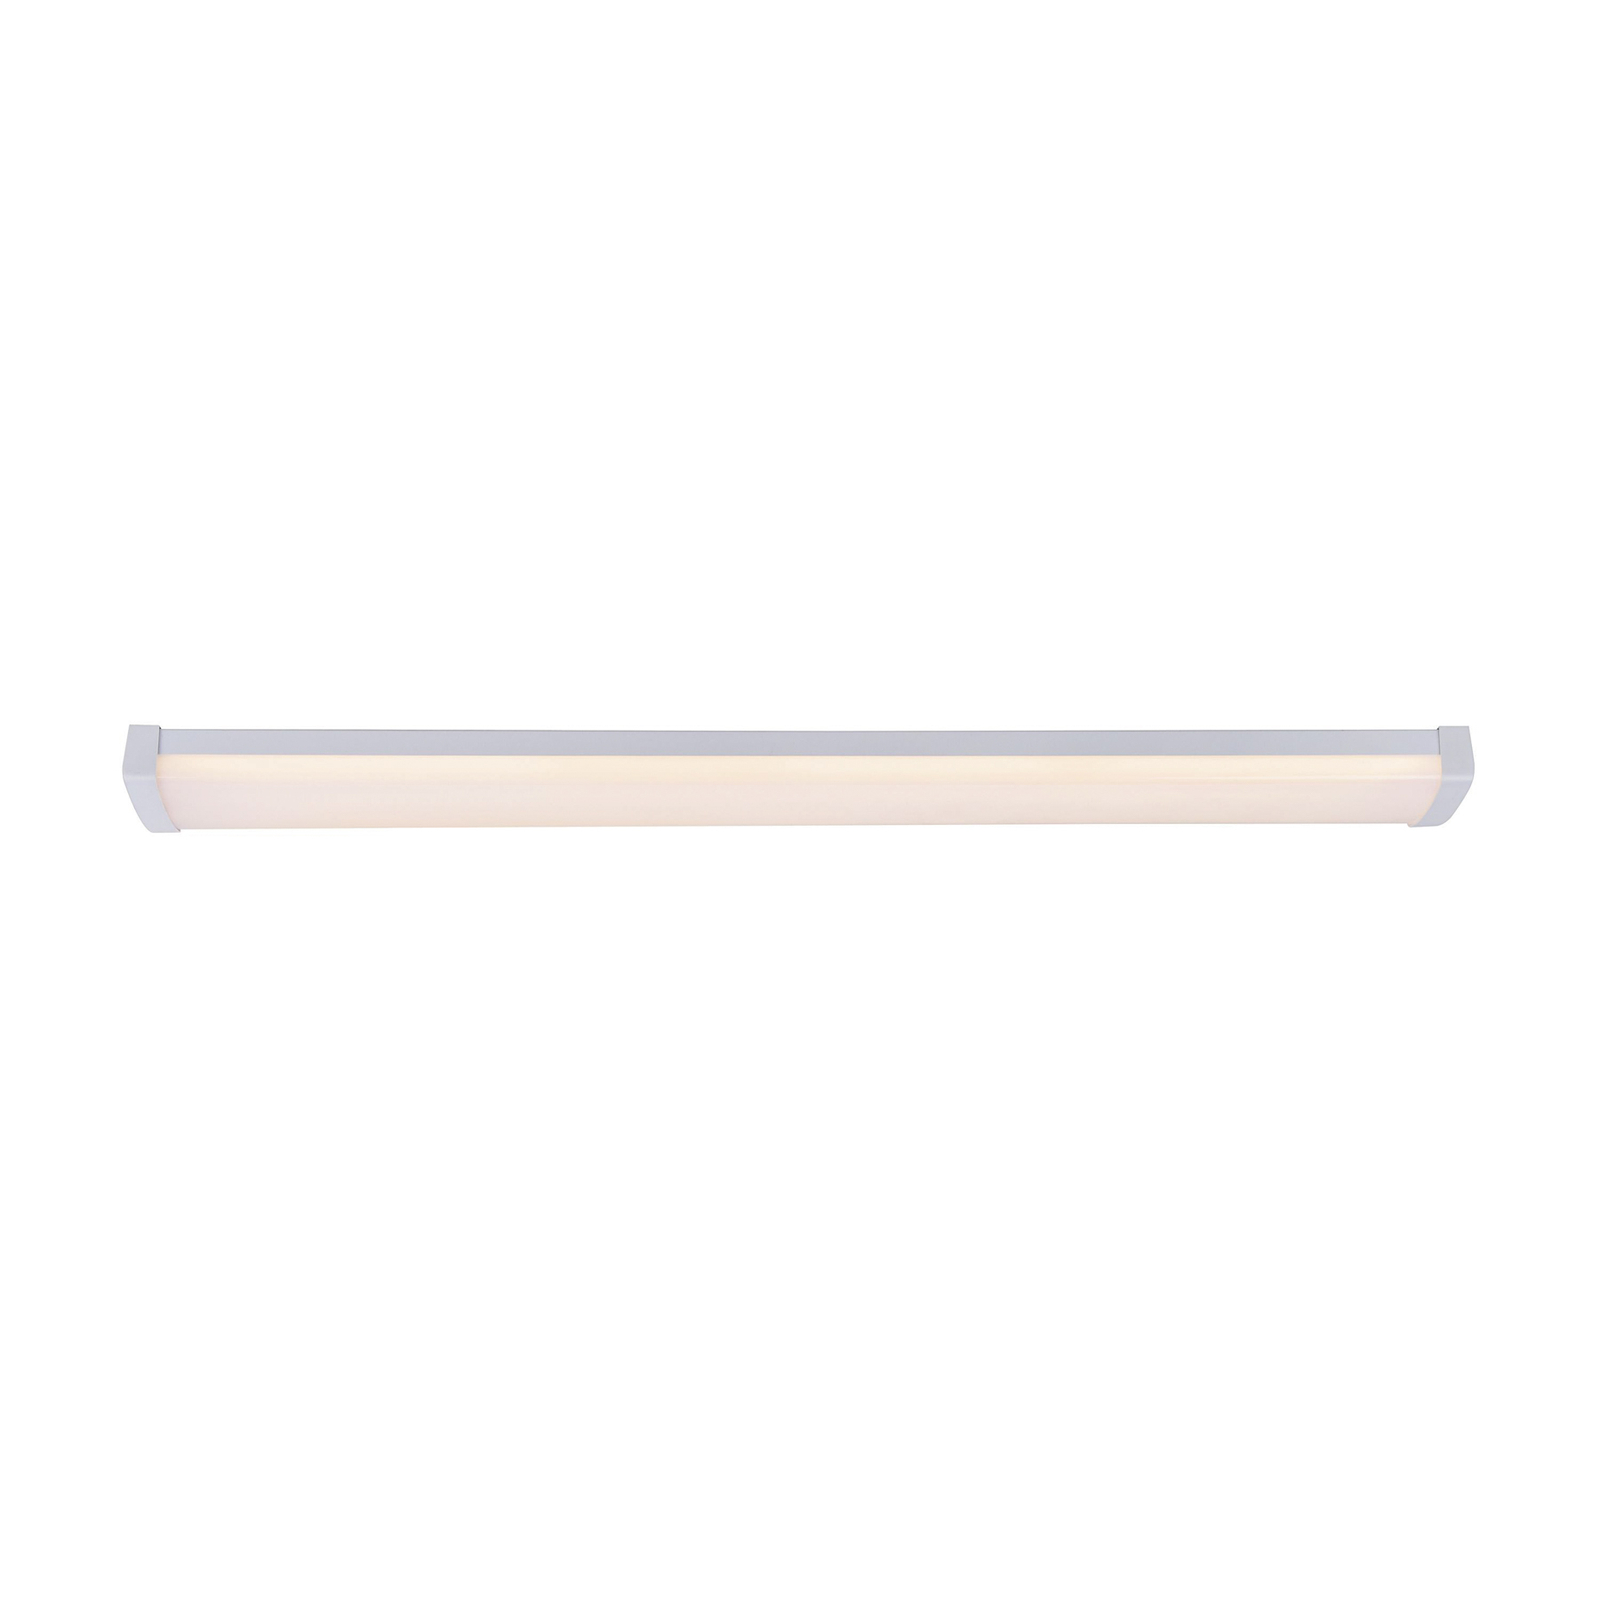 Wilmington LED lichtstrip, lengte 90,5 cm, wit, kunststof